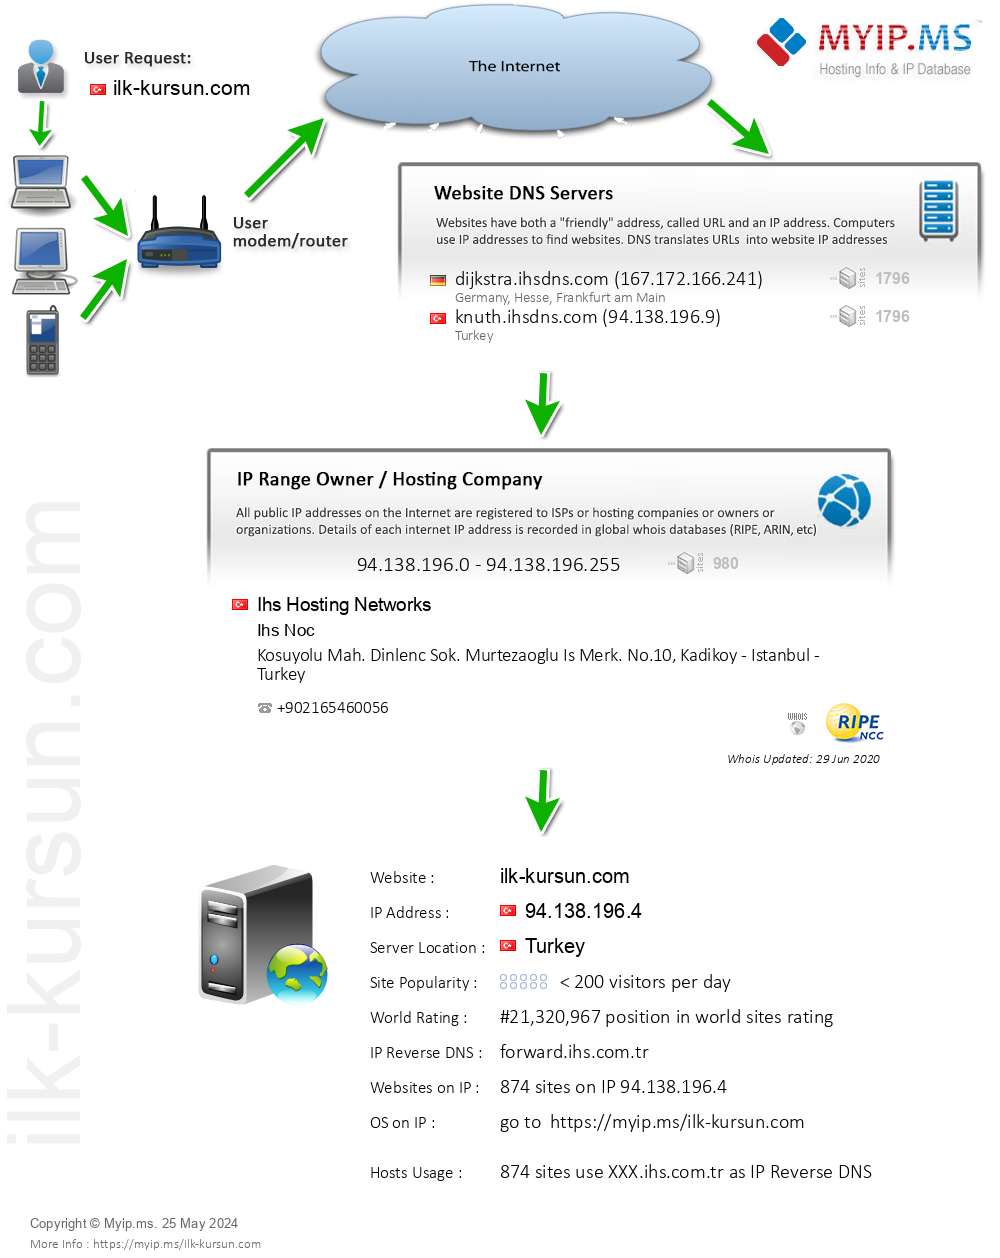 Ilk-kursun.com - Website Hosting Visual IP Diagram